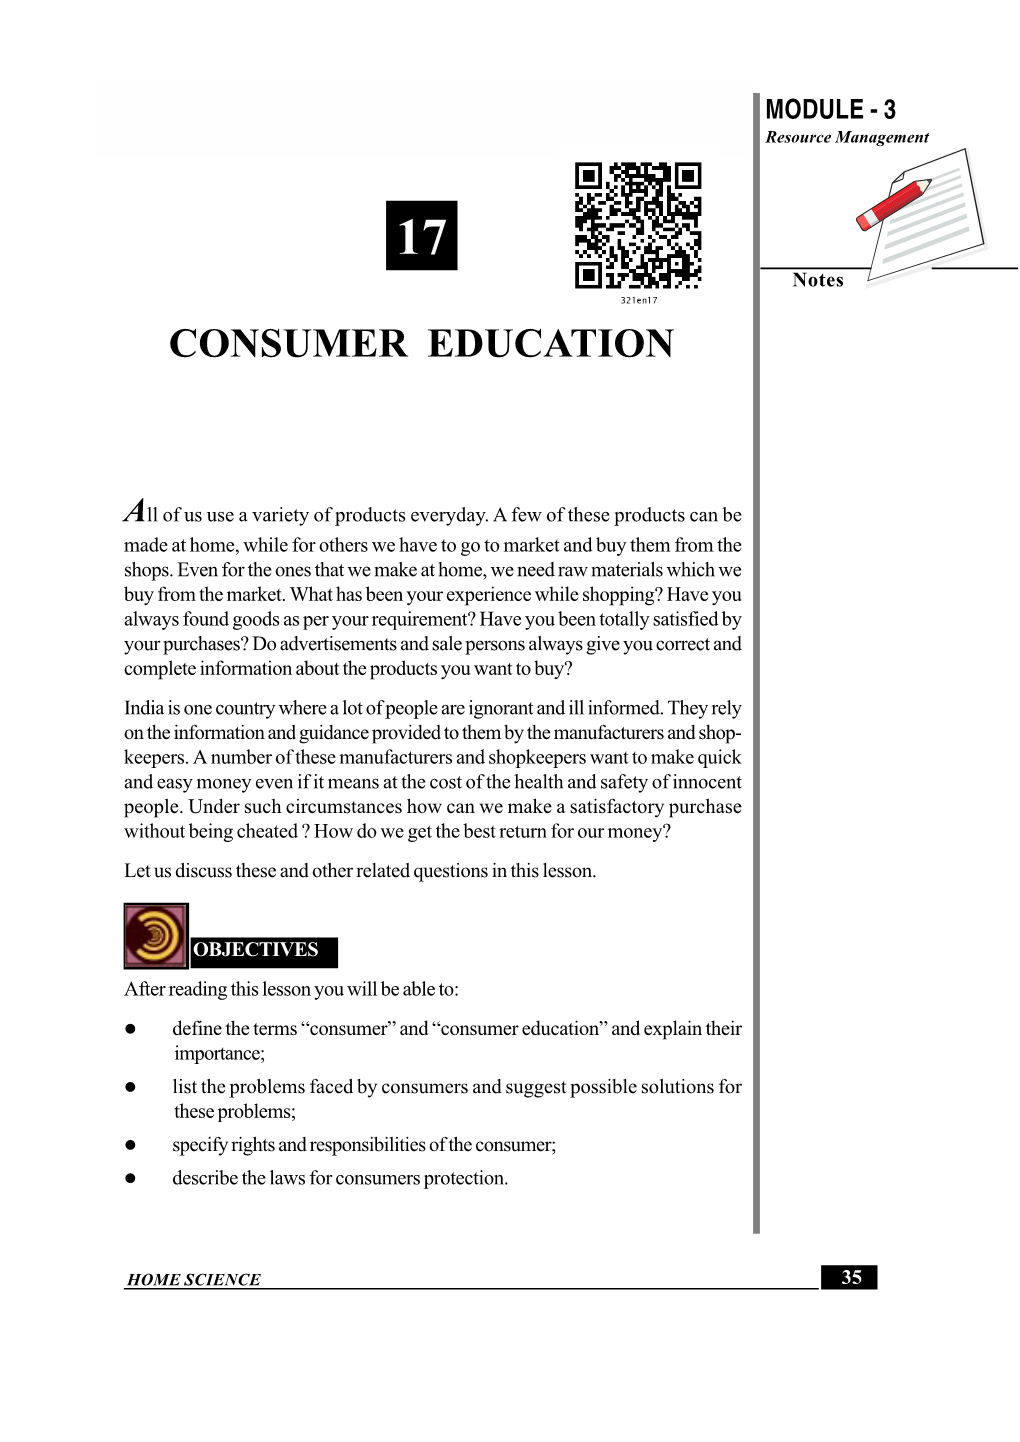 Consumer Education MODULE - 3 Resource Management